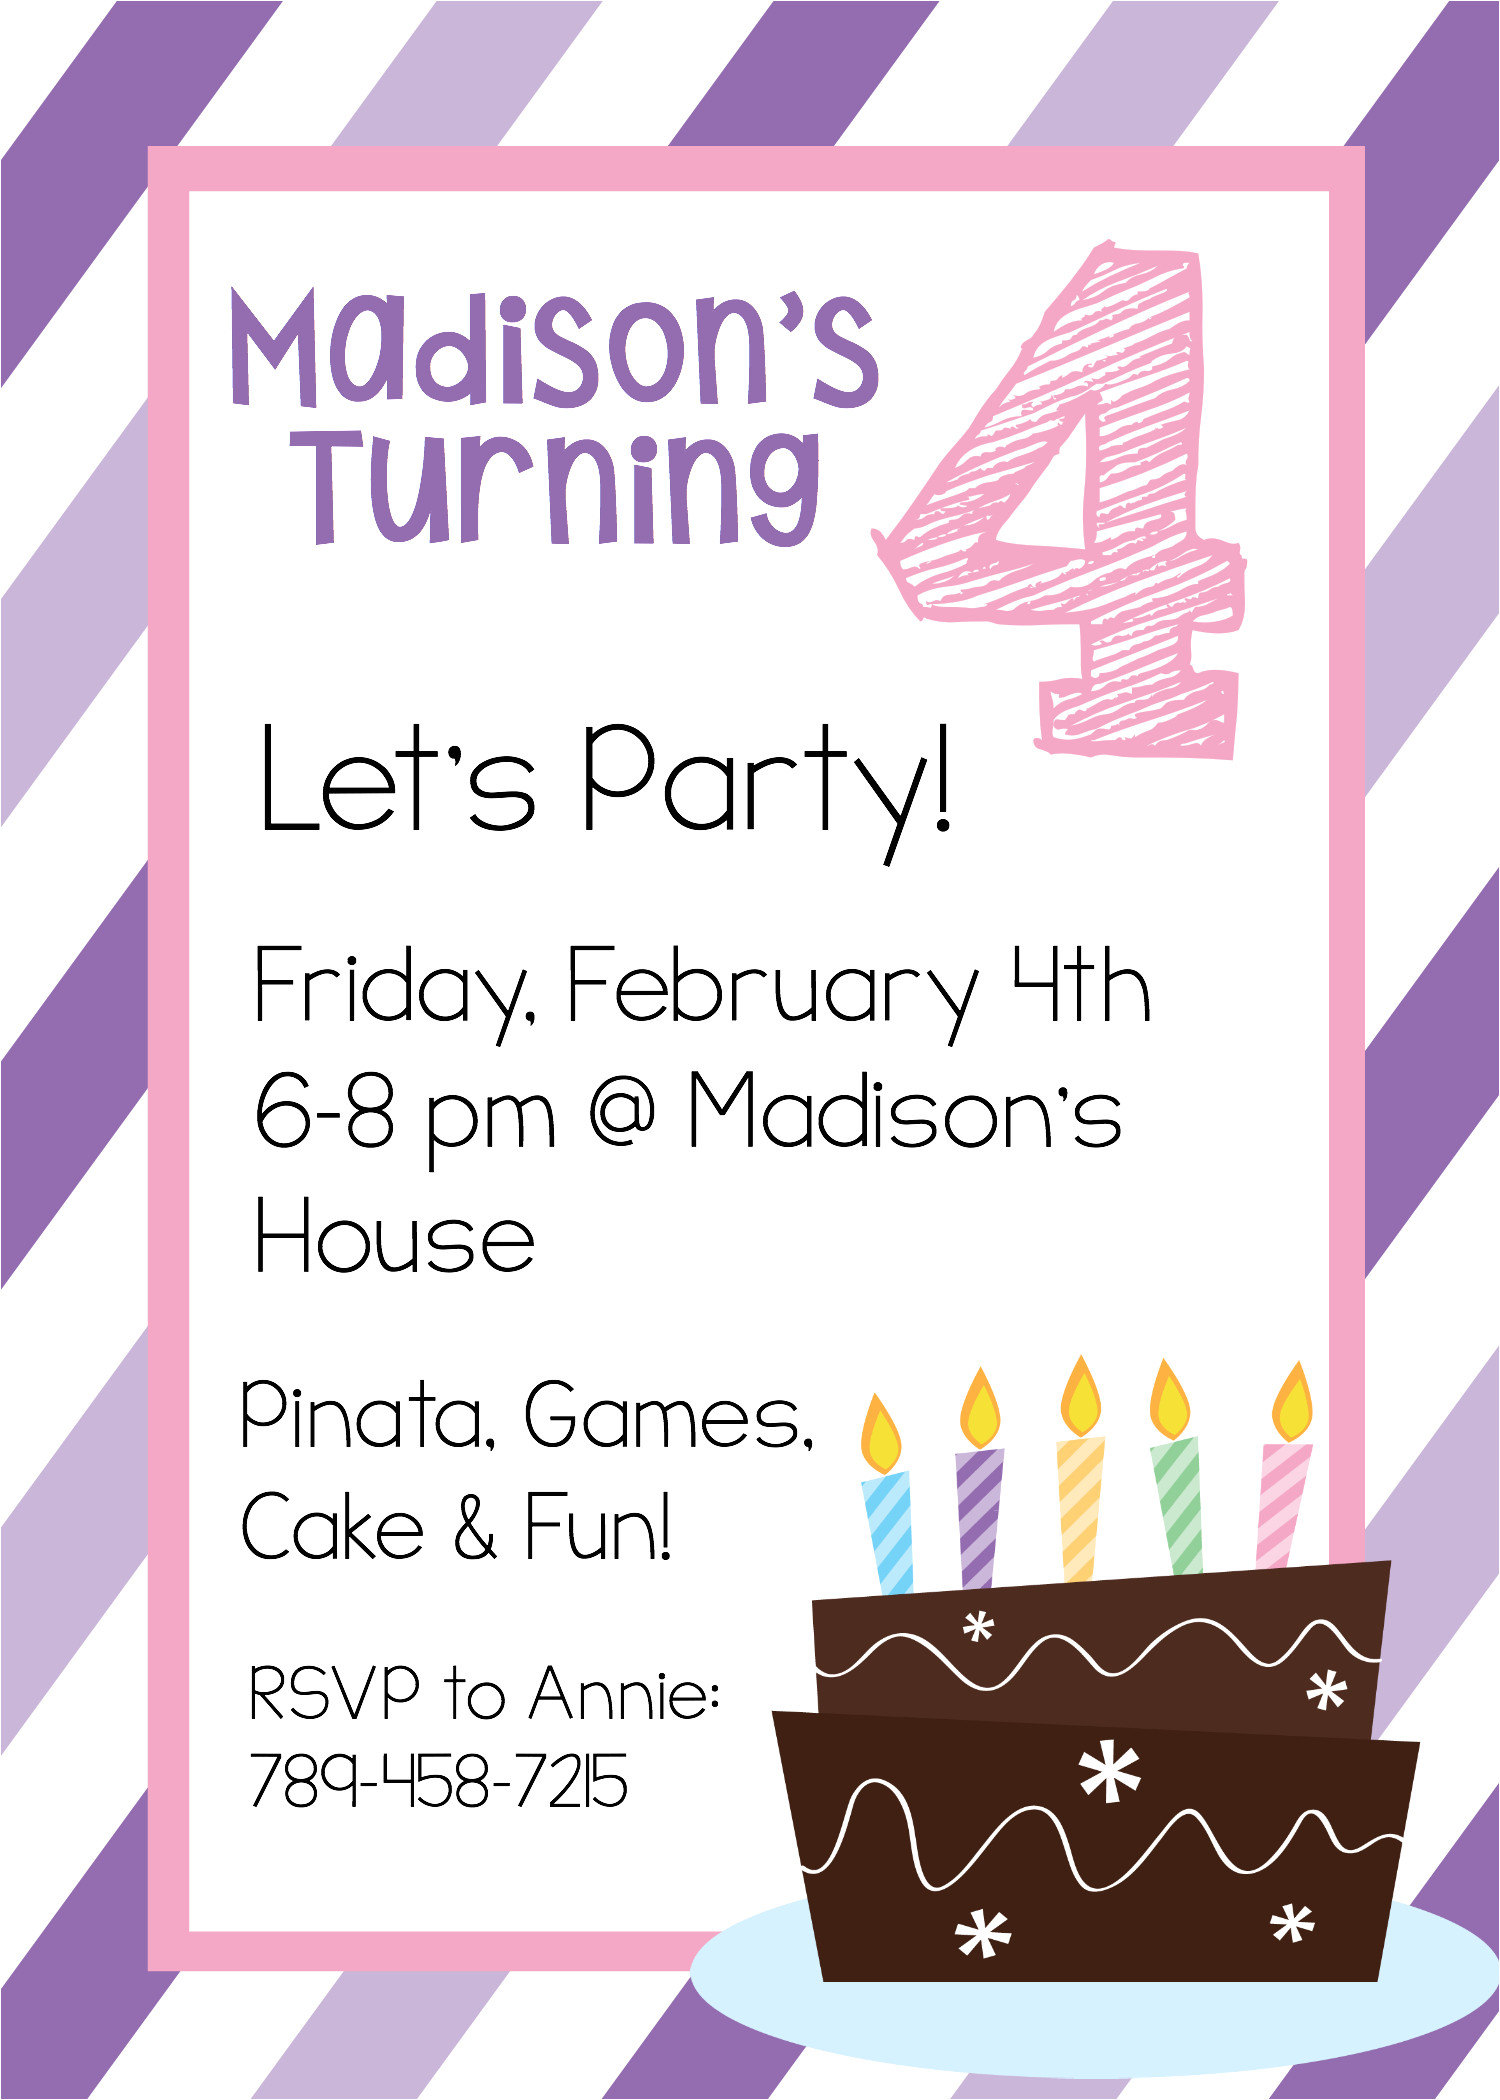 Party Invitation Template Girl Free Printable Birthday Invitation Templates